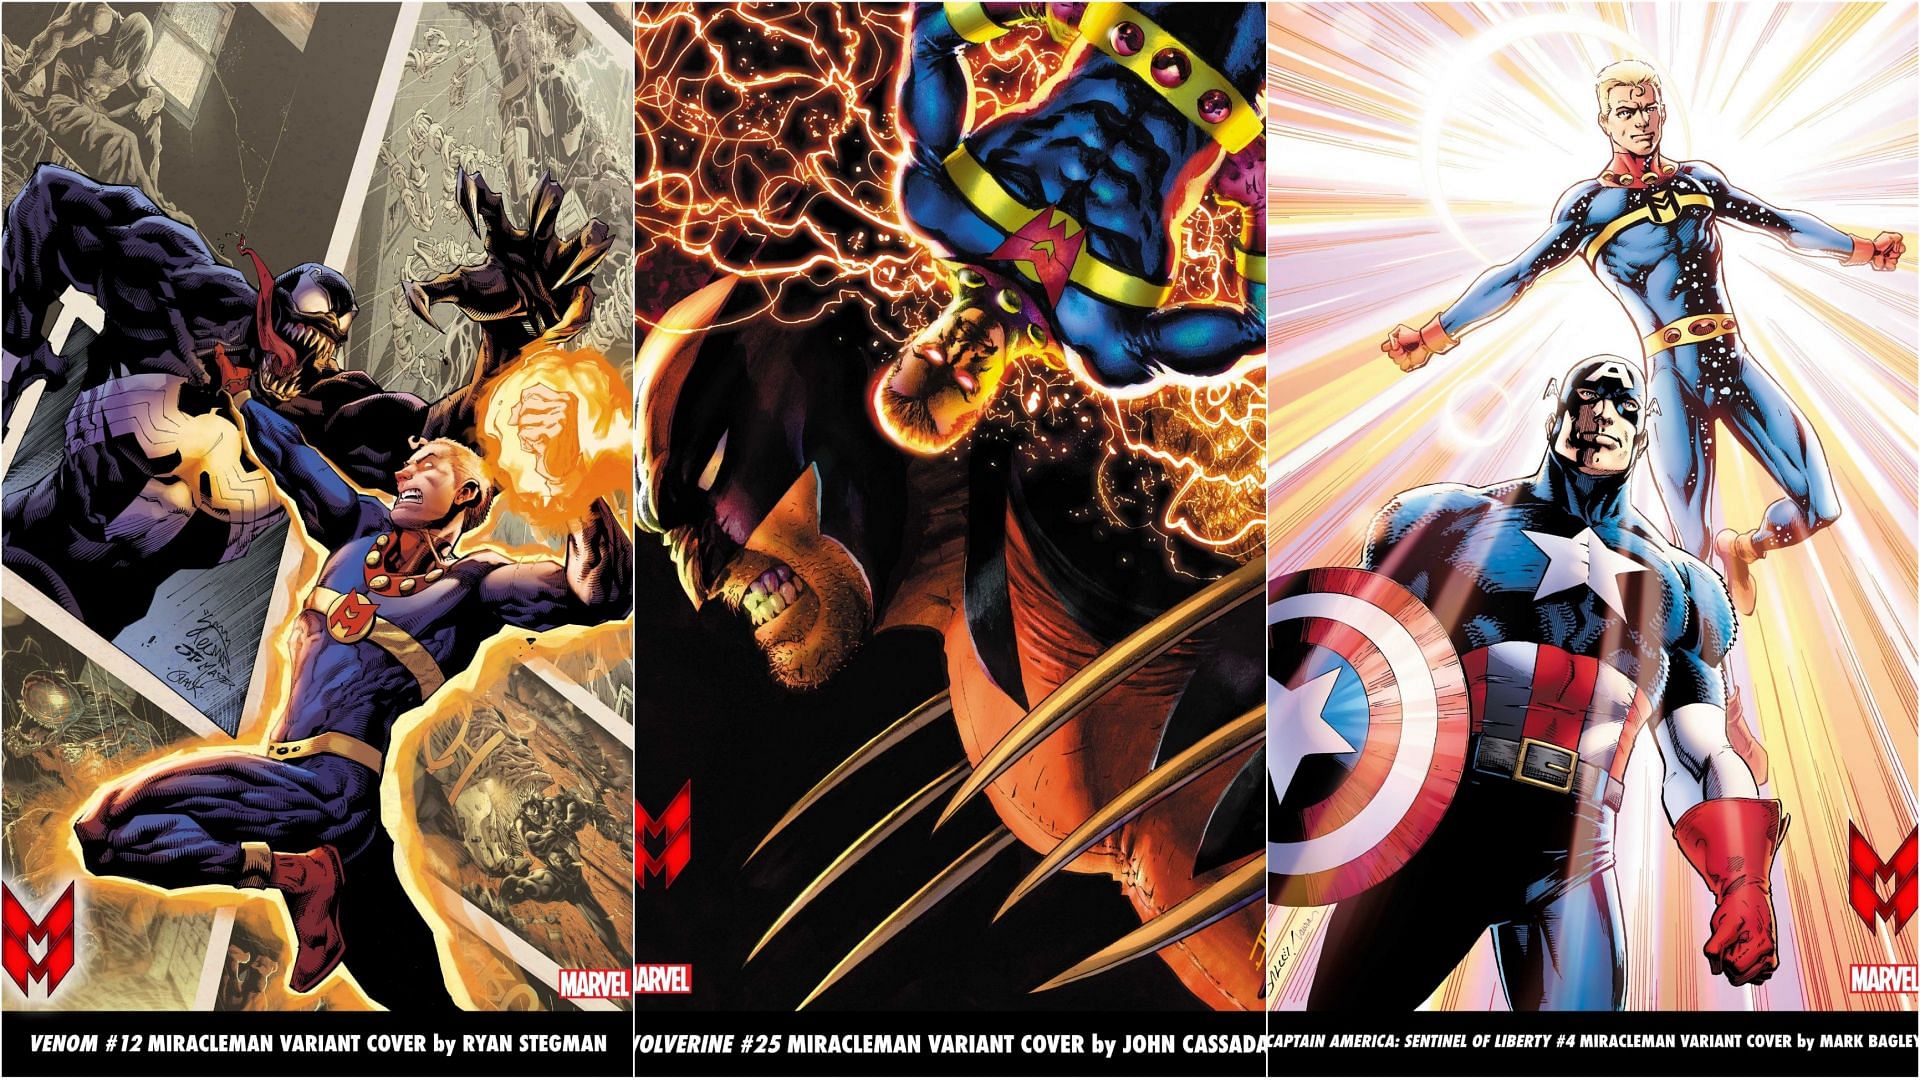 Comic covers (Image via Marvel Comics)